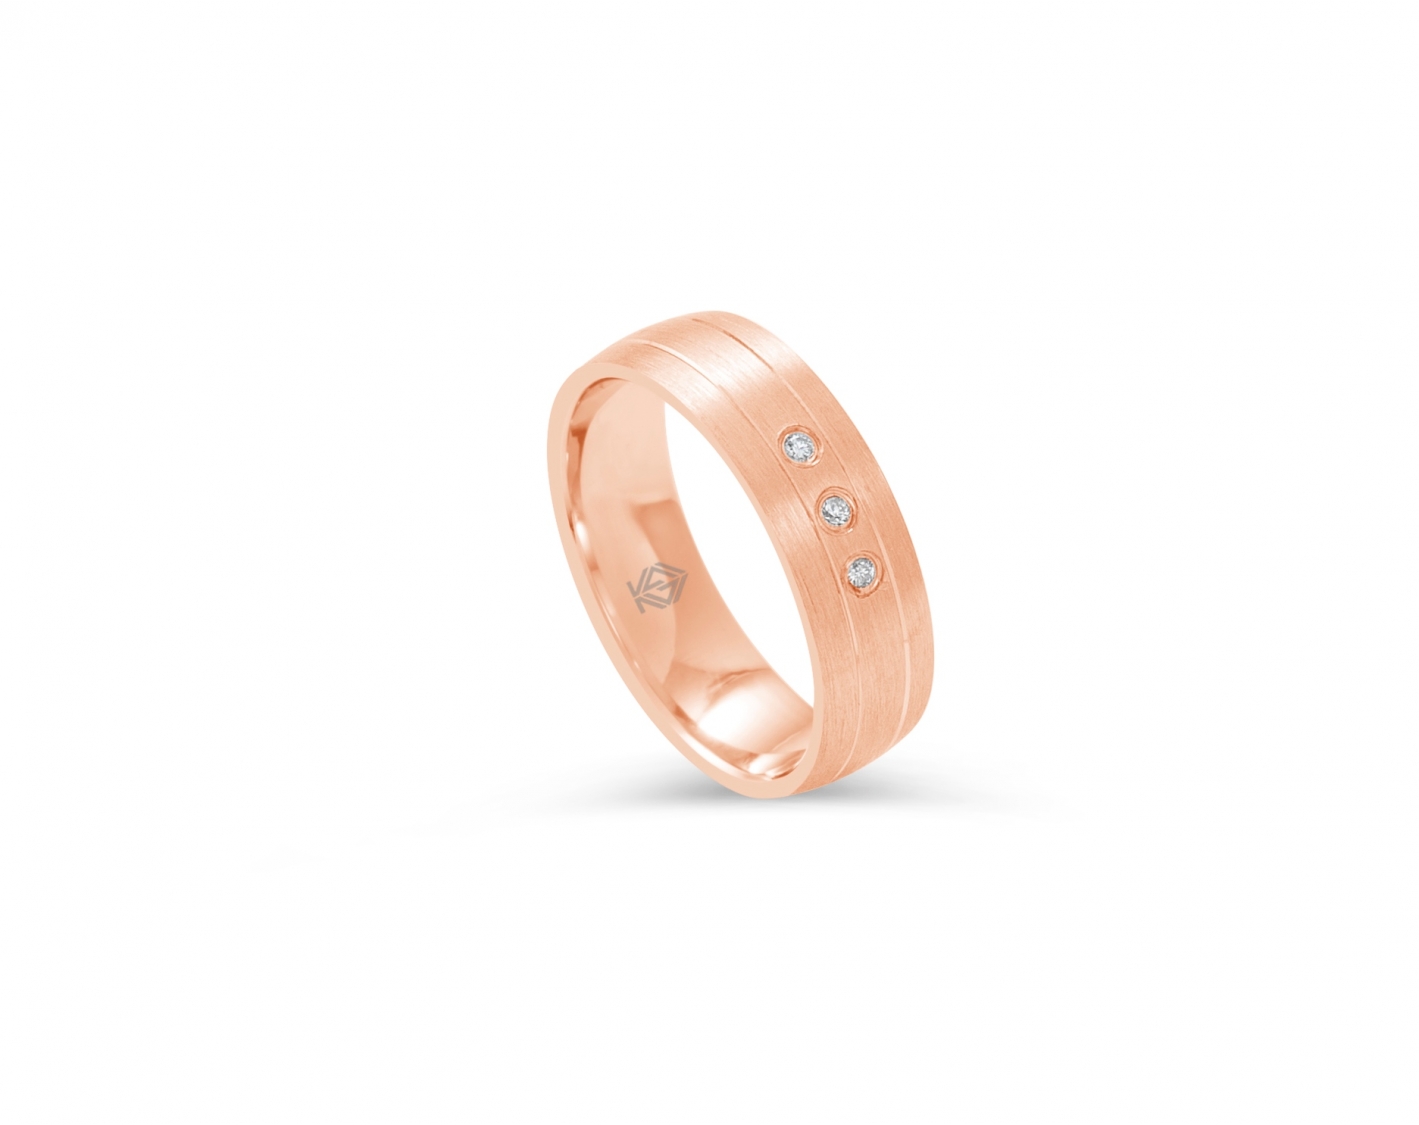 18k rose gold 5mm matte wedding ring set with three round diamonds Photos & images